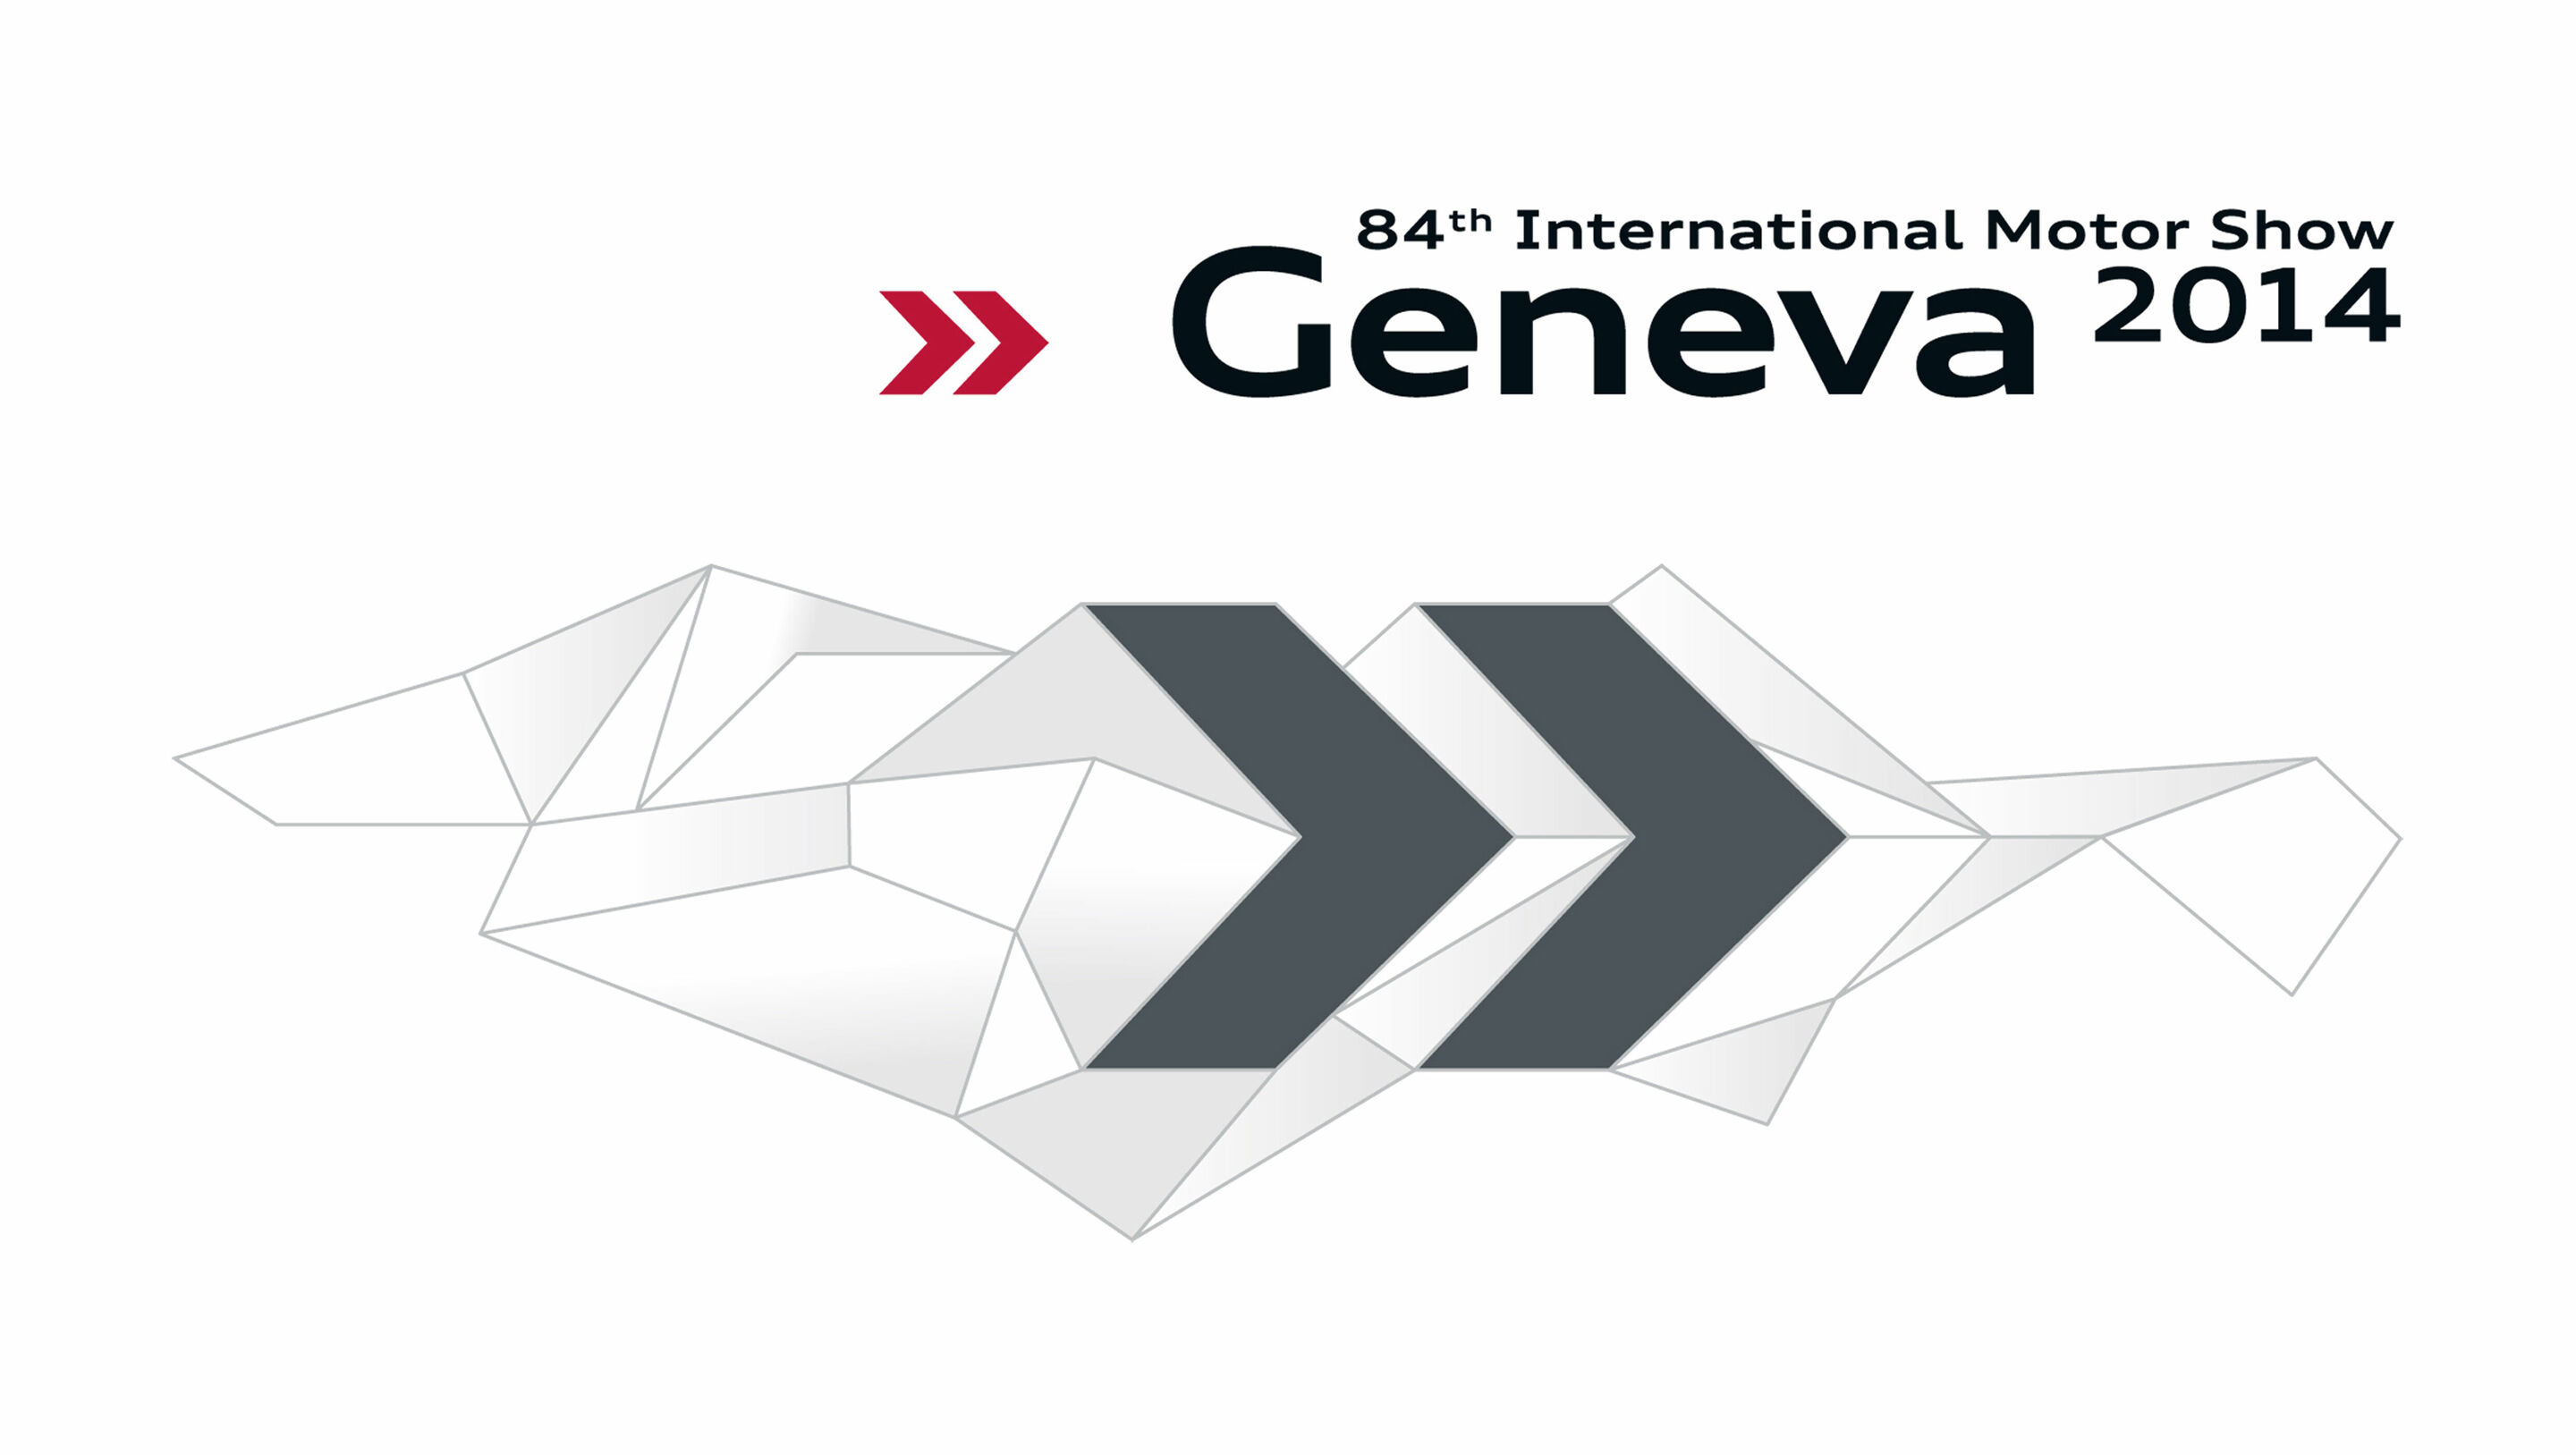 Live from Geneva: Three Audi world premieres at the 84th Geneva International Motor Show in 2014